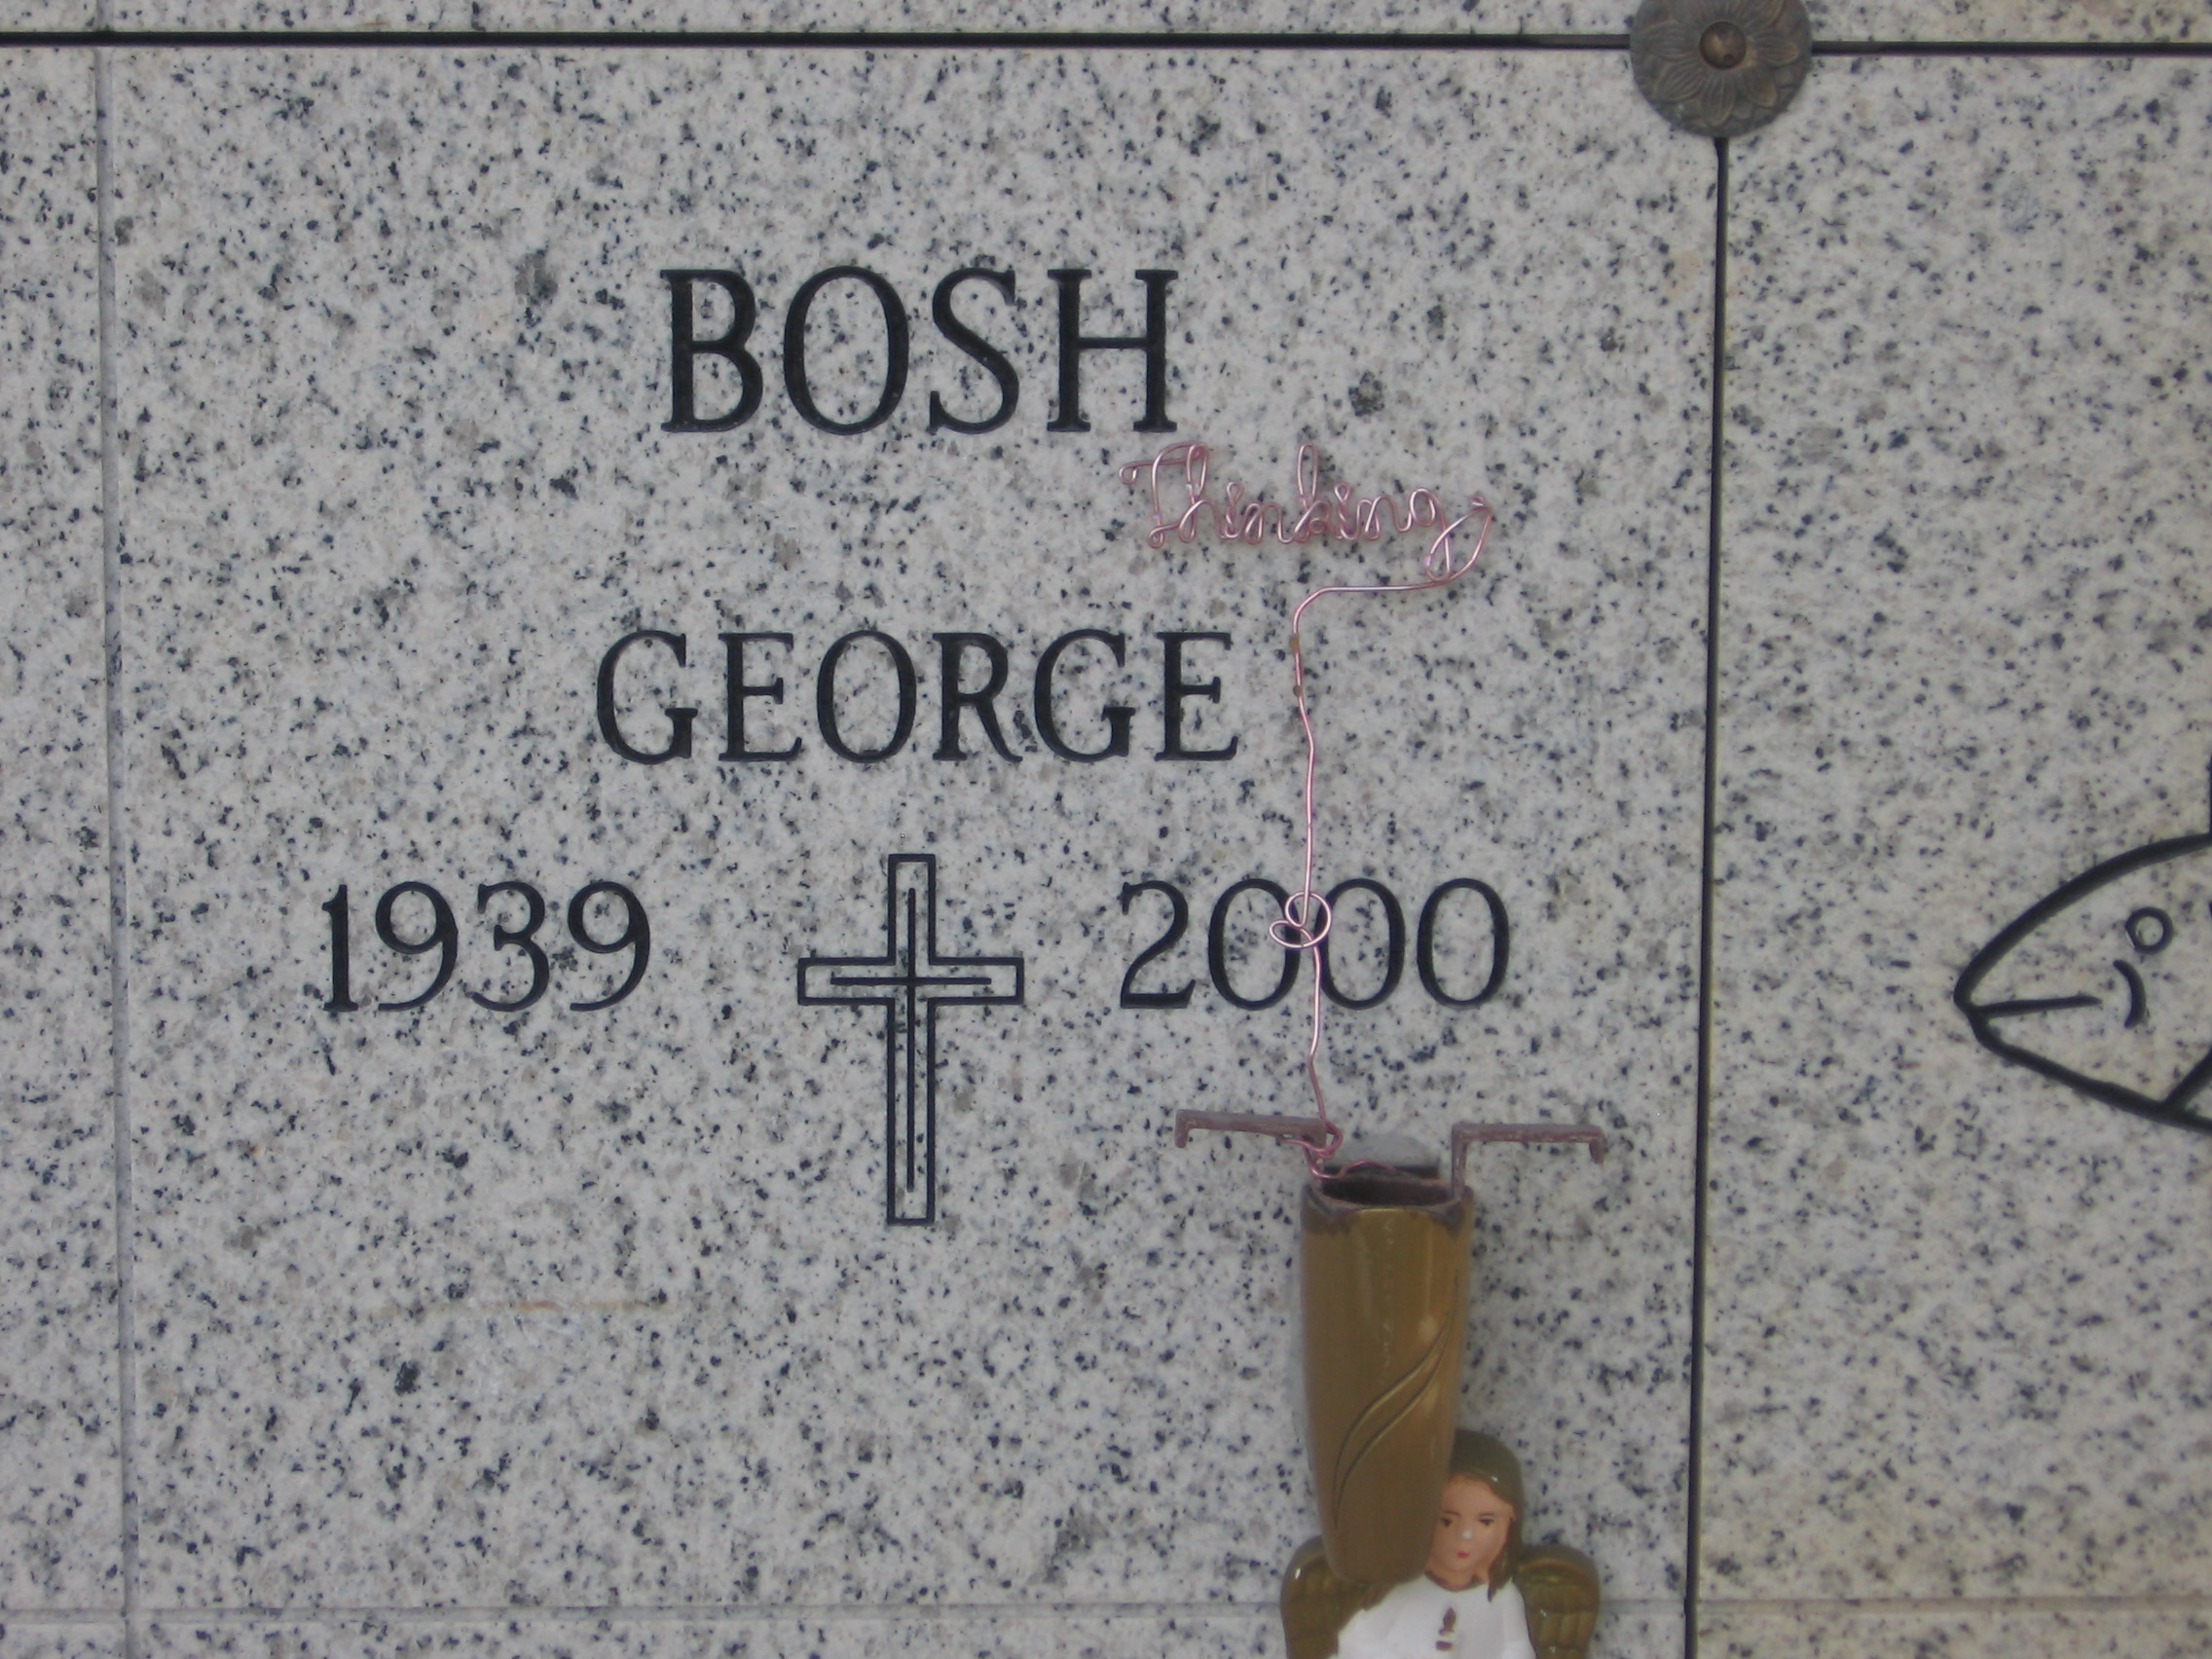 George Bosh